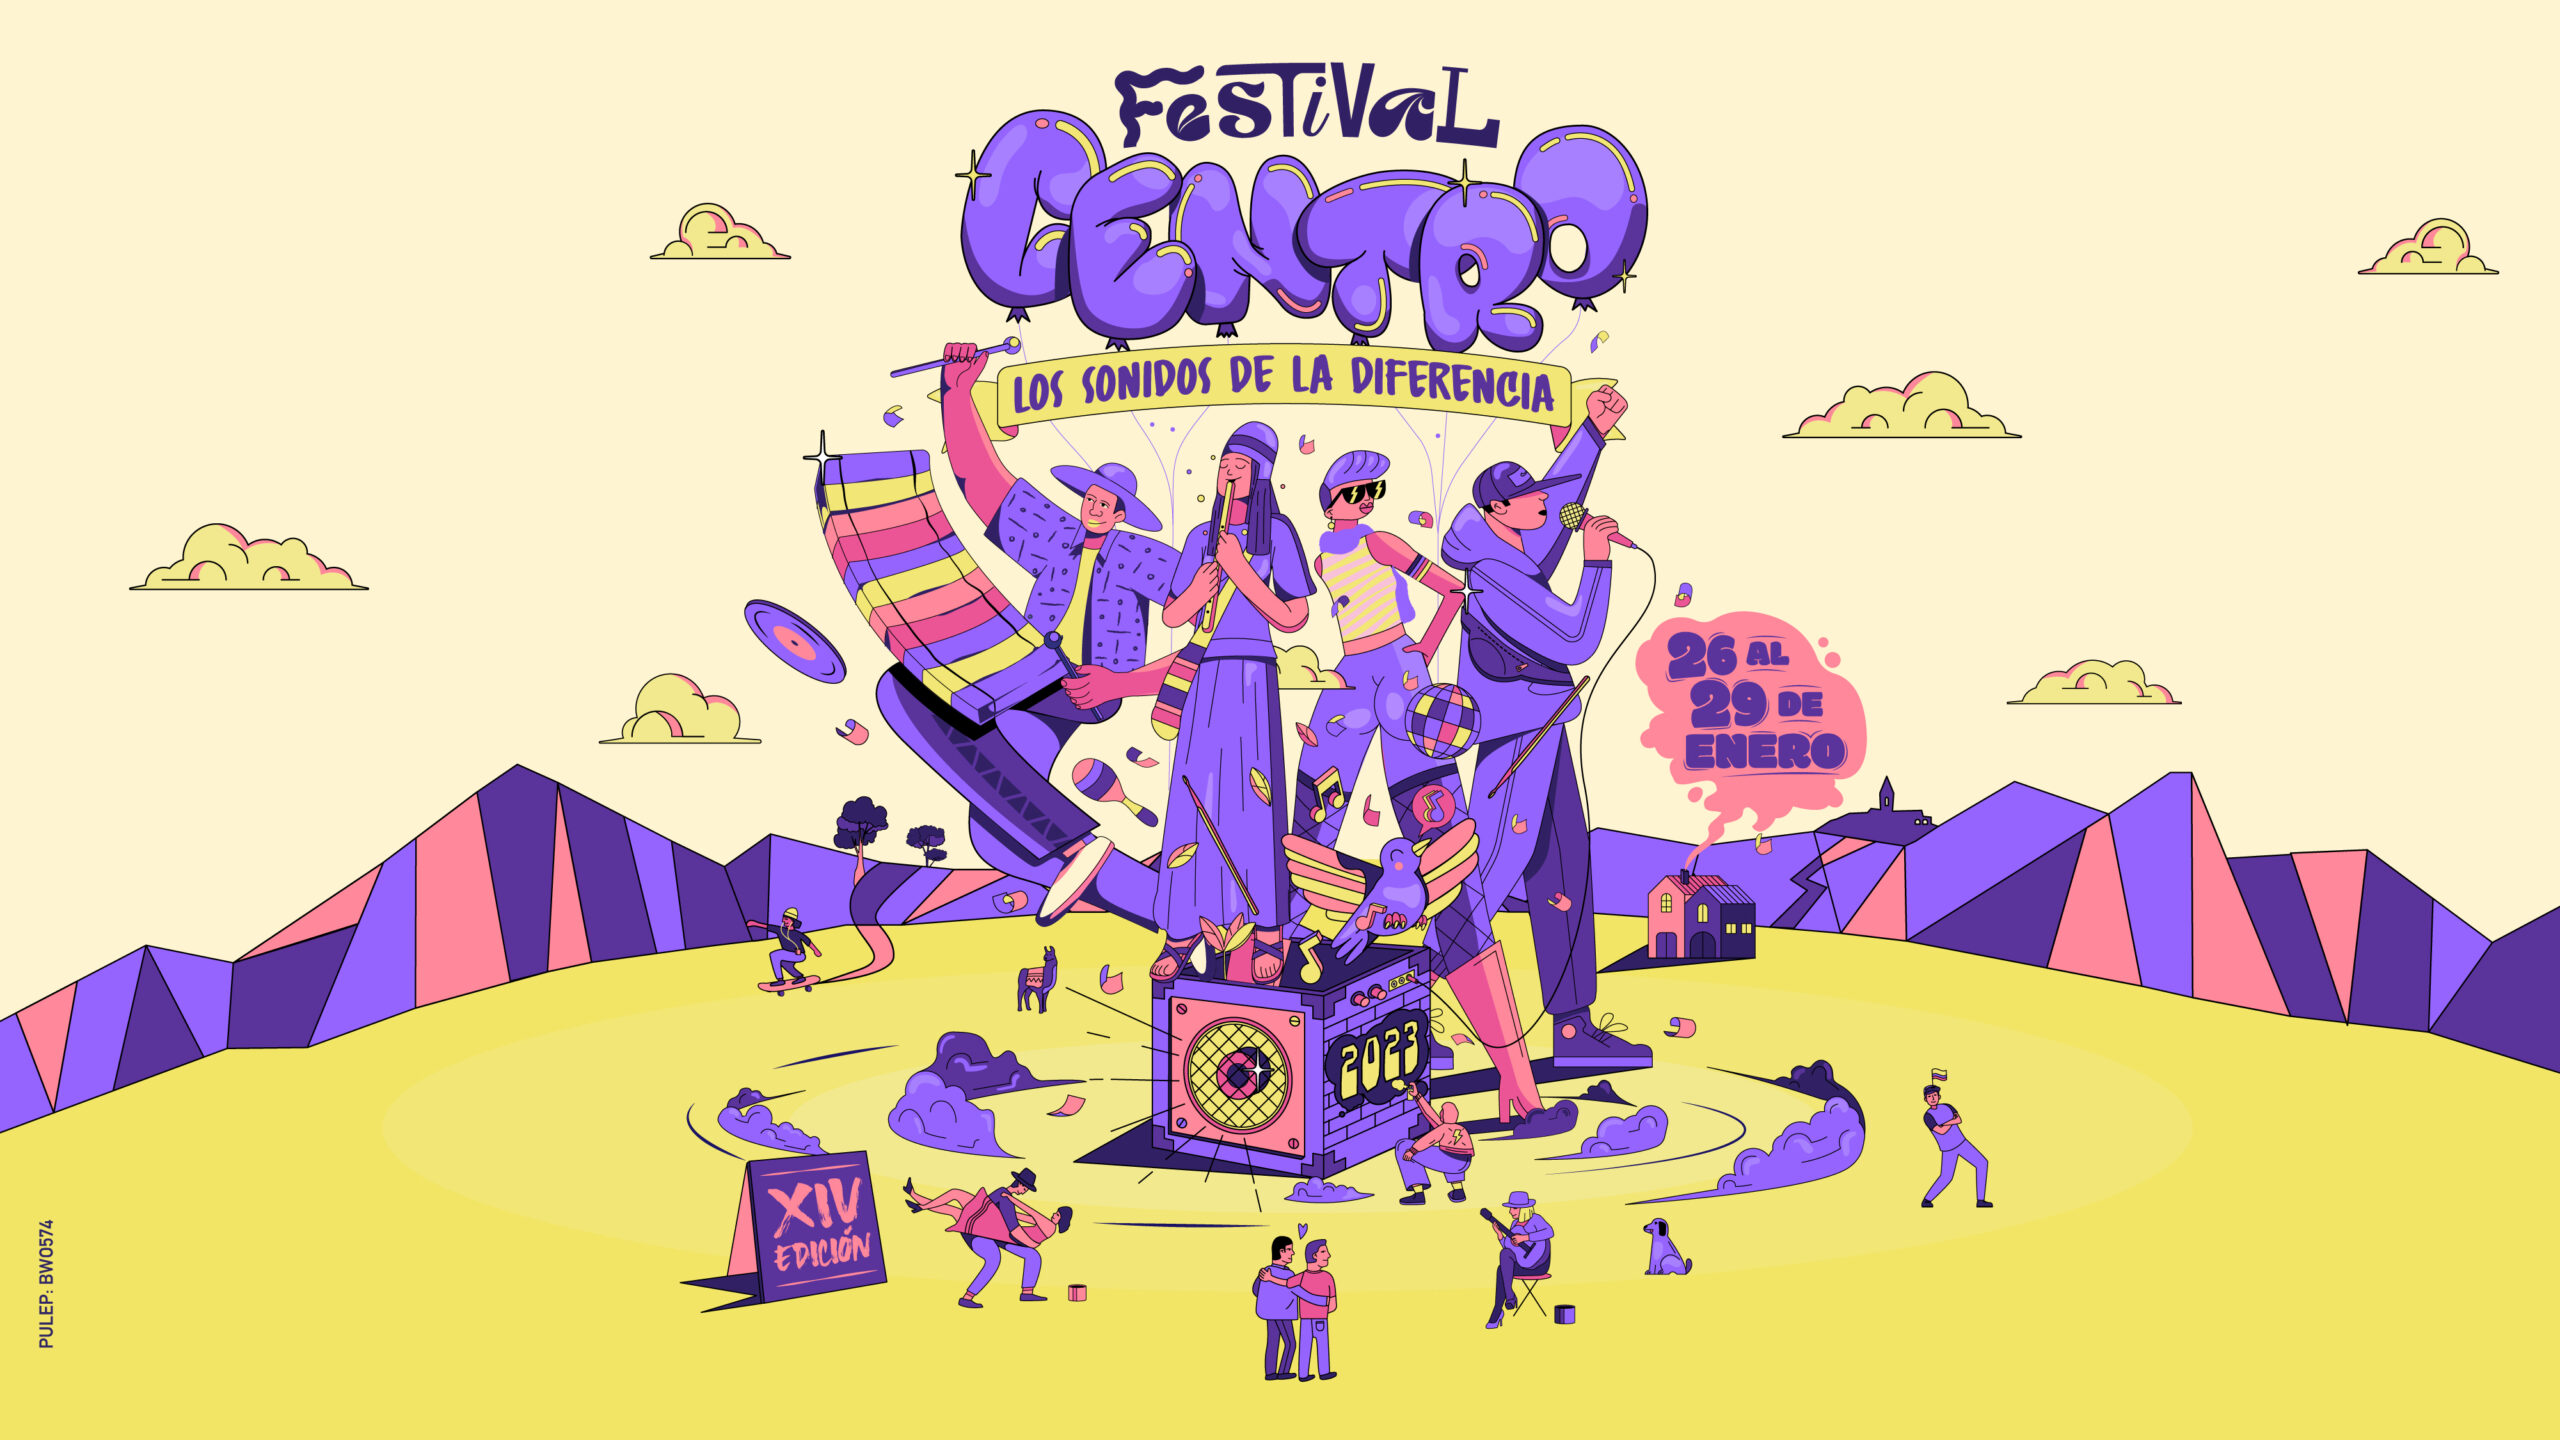 Festival Centro kicks off the capital’s cultural calendar